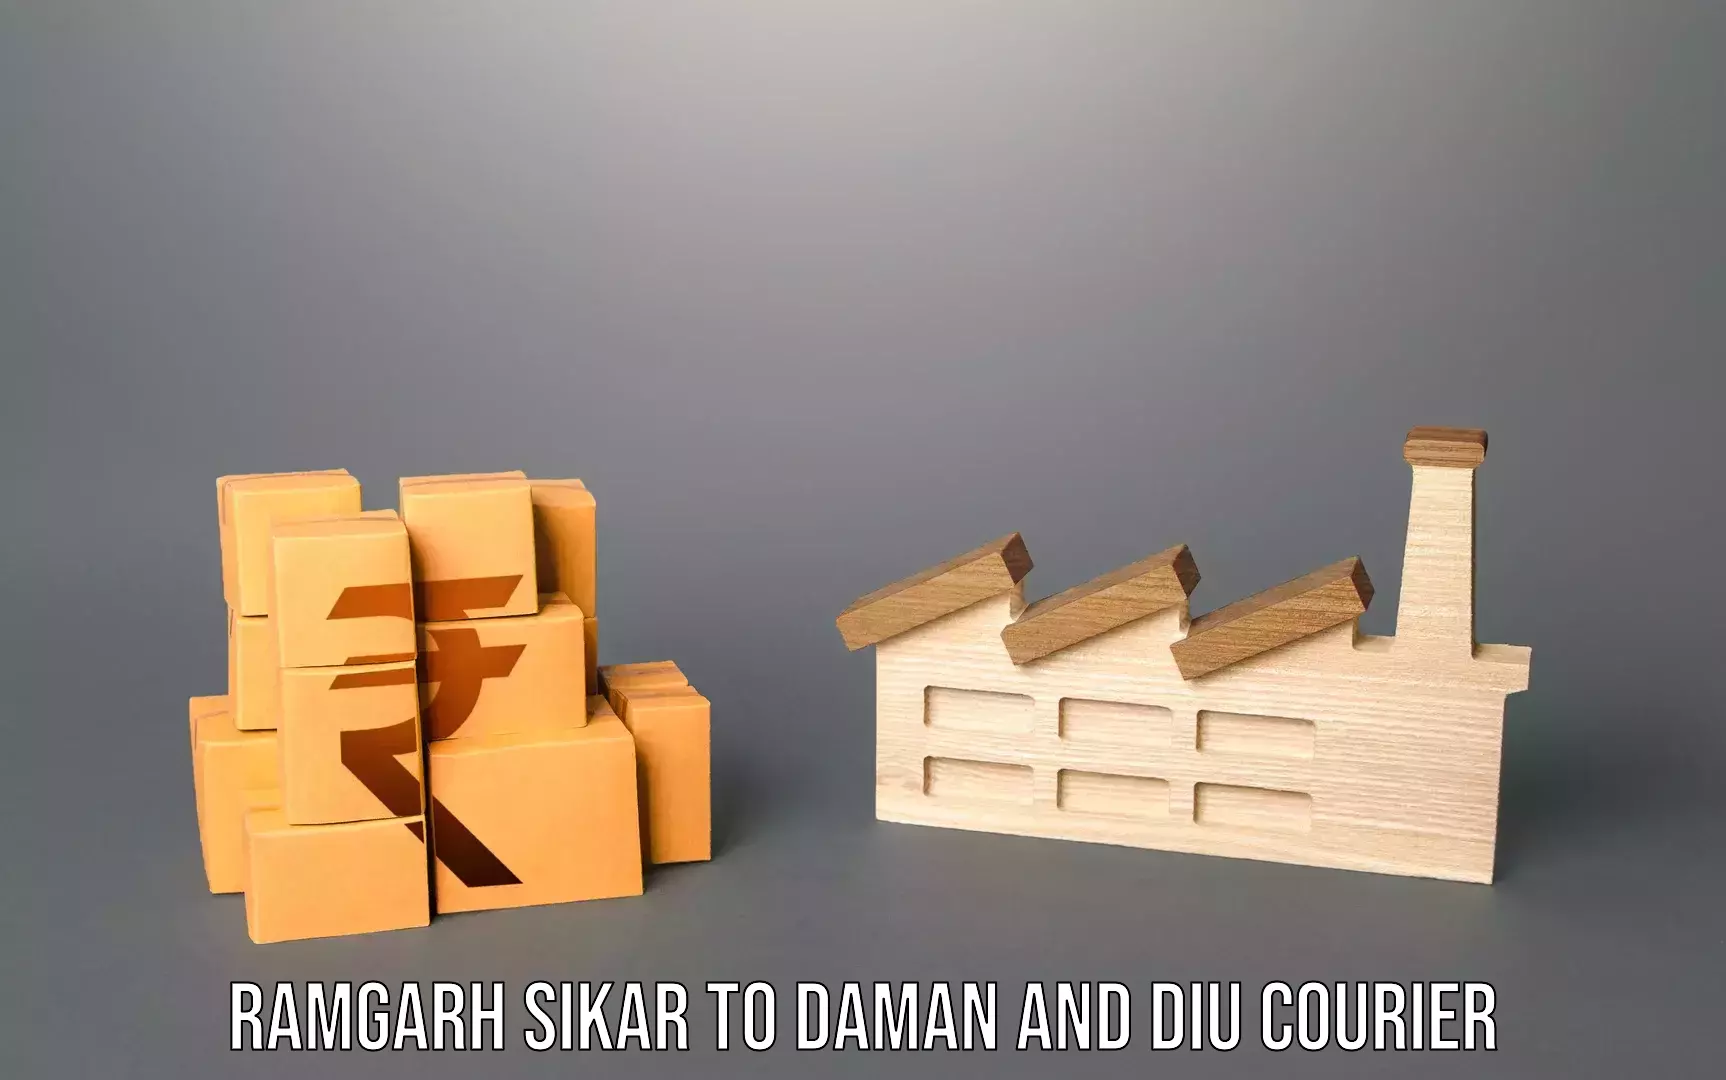 Baggage transport network Ramgarh Sikar to Diu